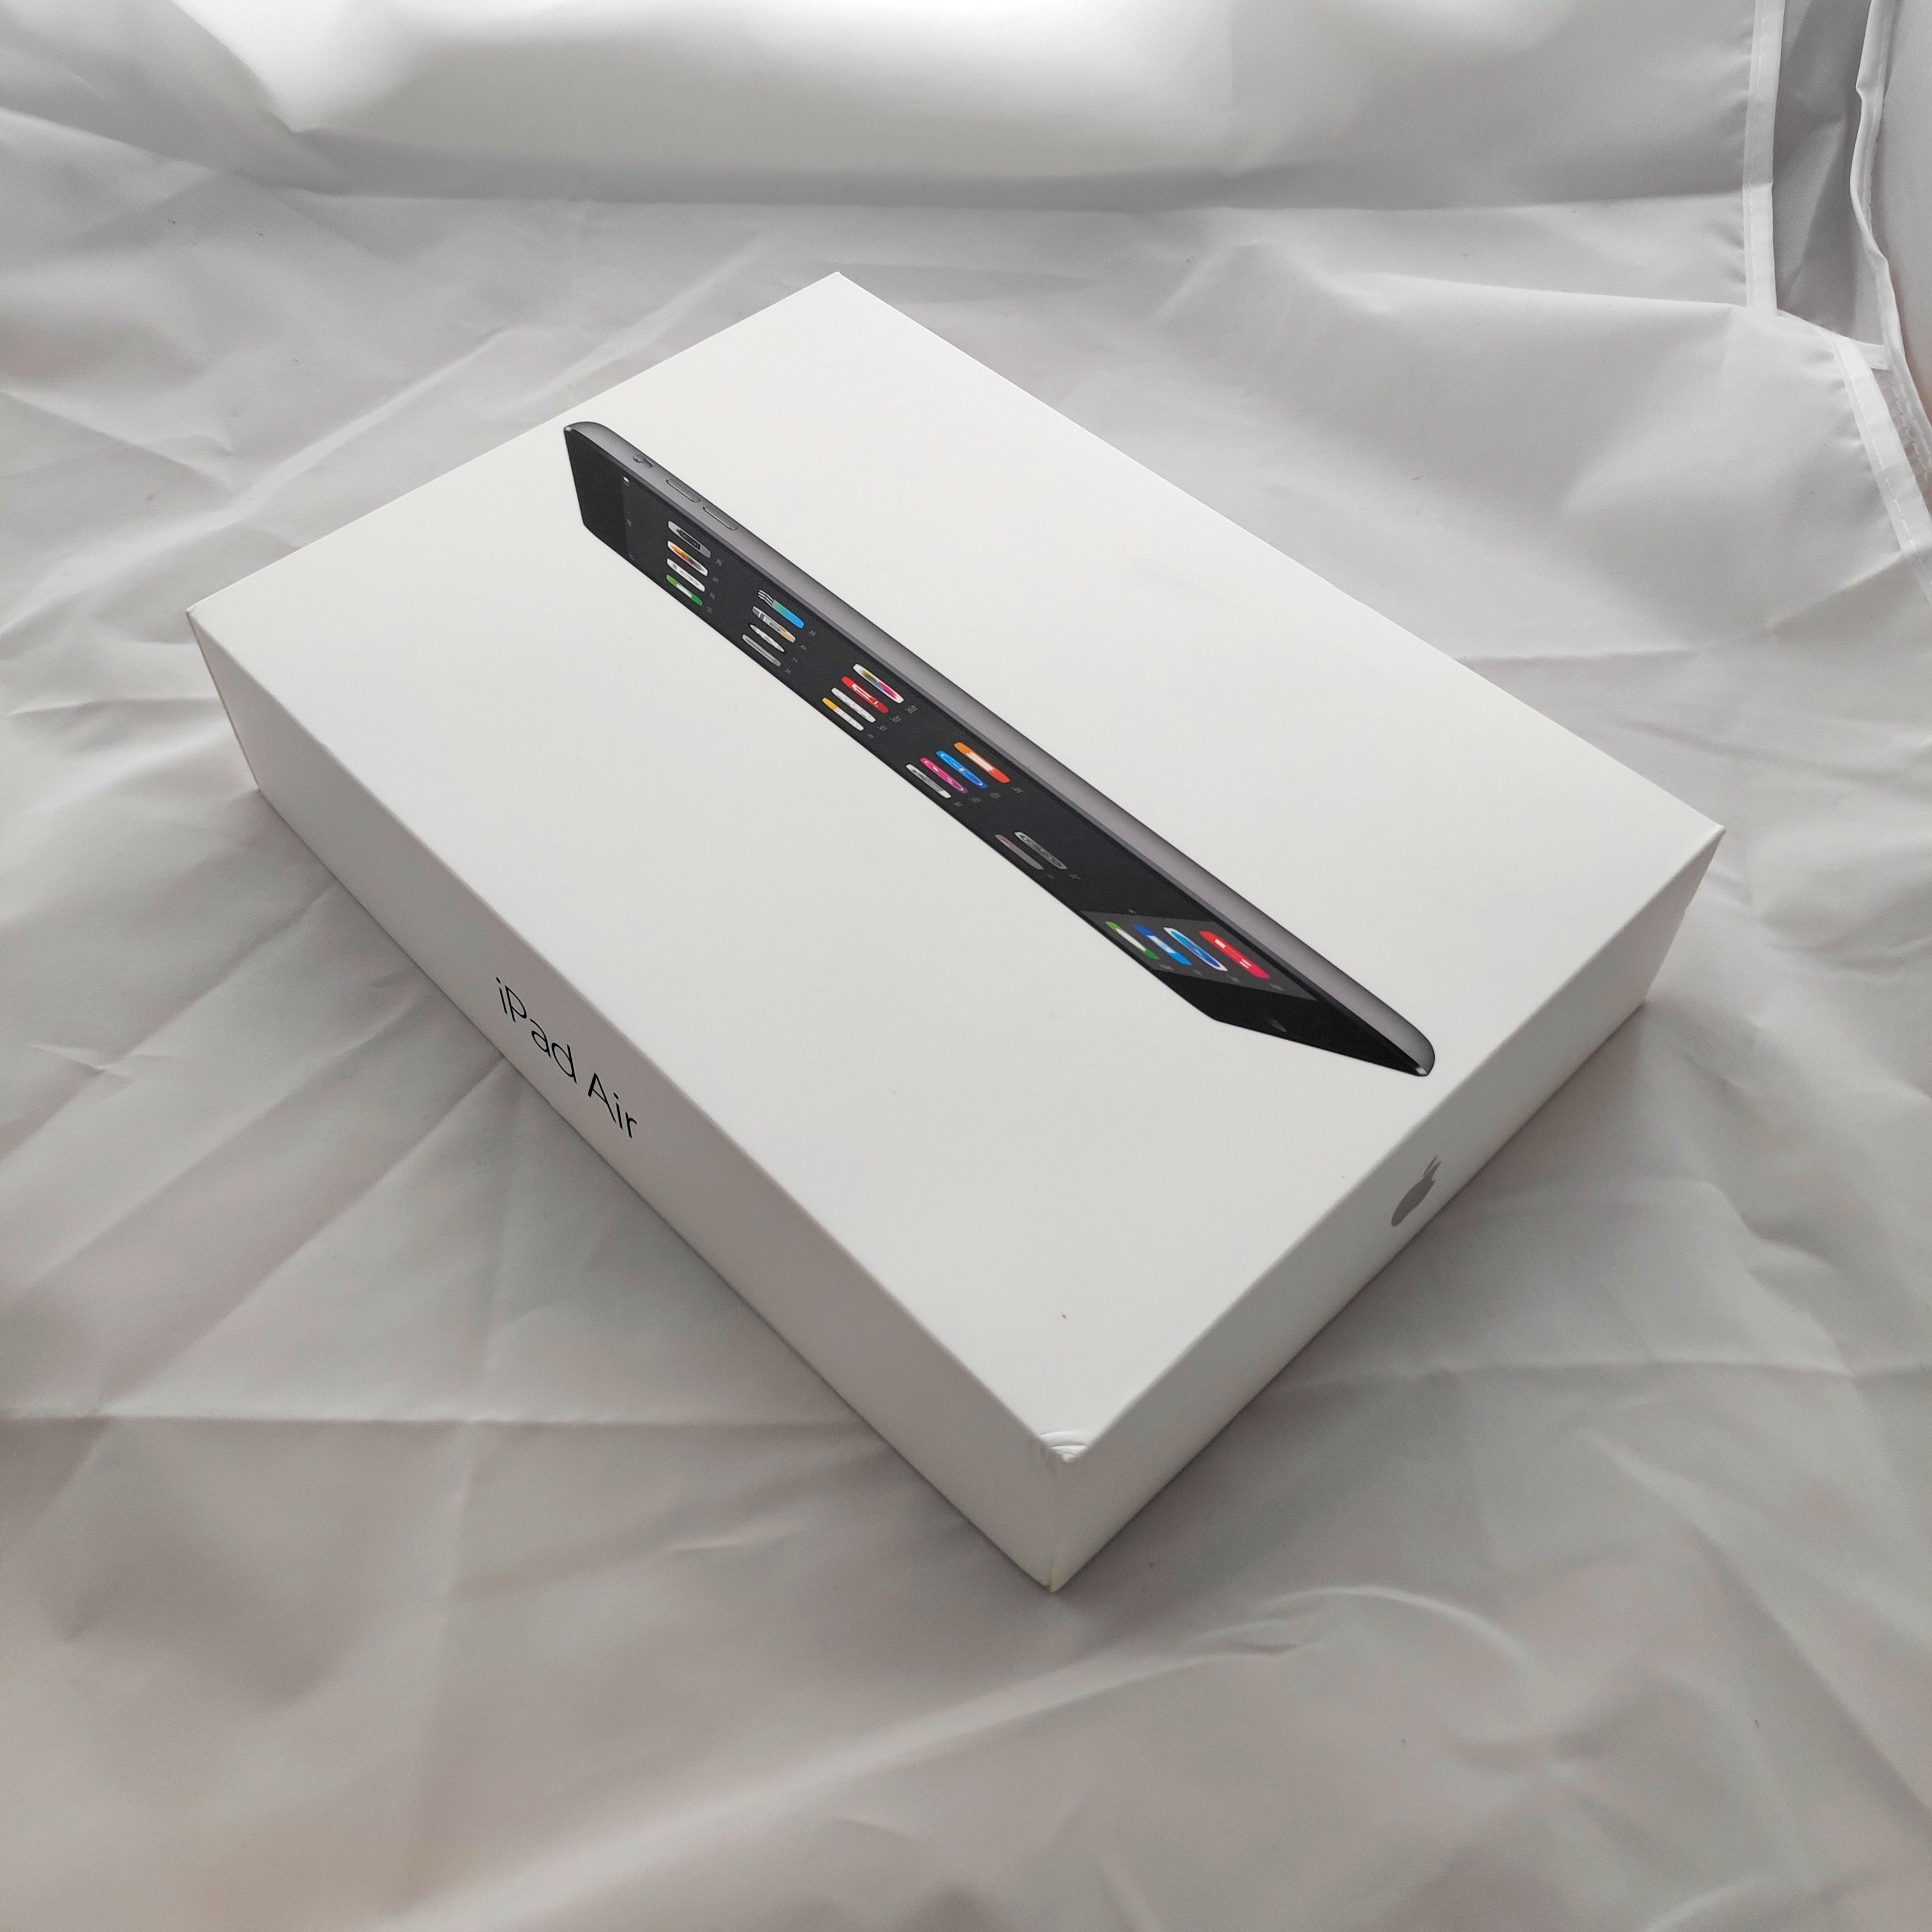 Apple iPad Air 2 64GB WiFi & Cellular 3G/4G (As New) Original Box, New Battery & Shipping